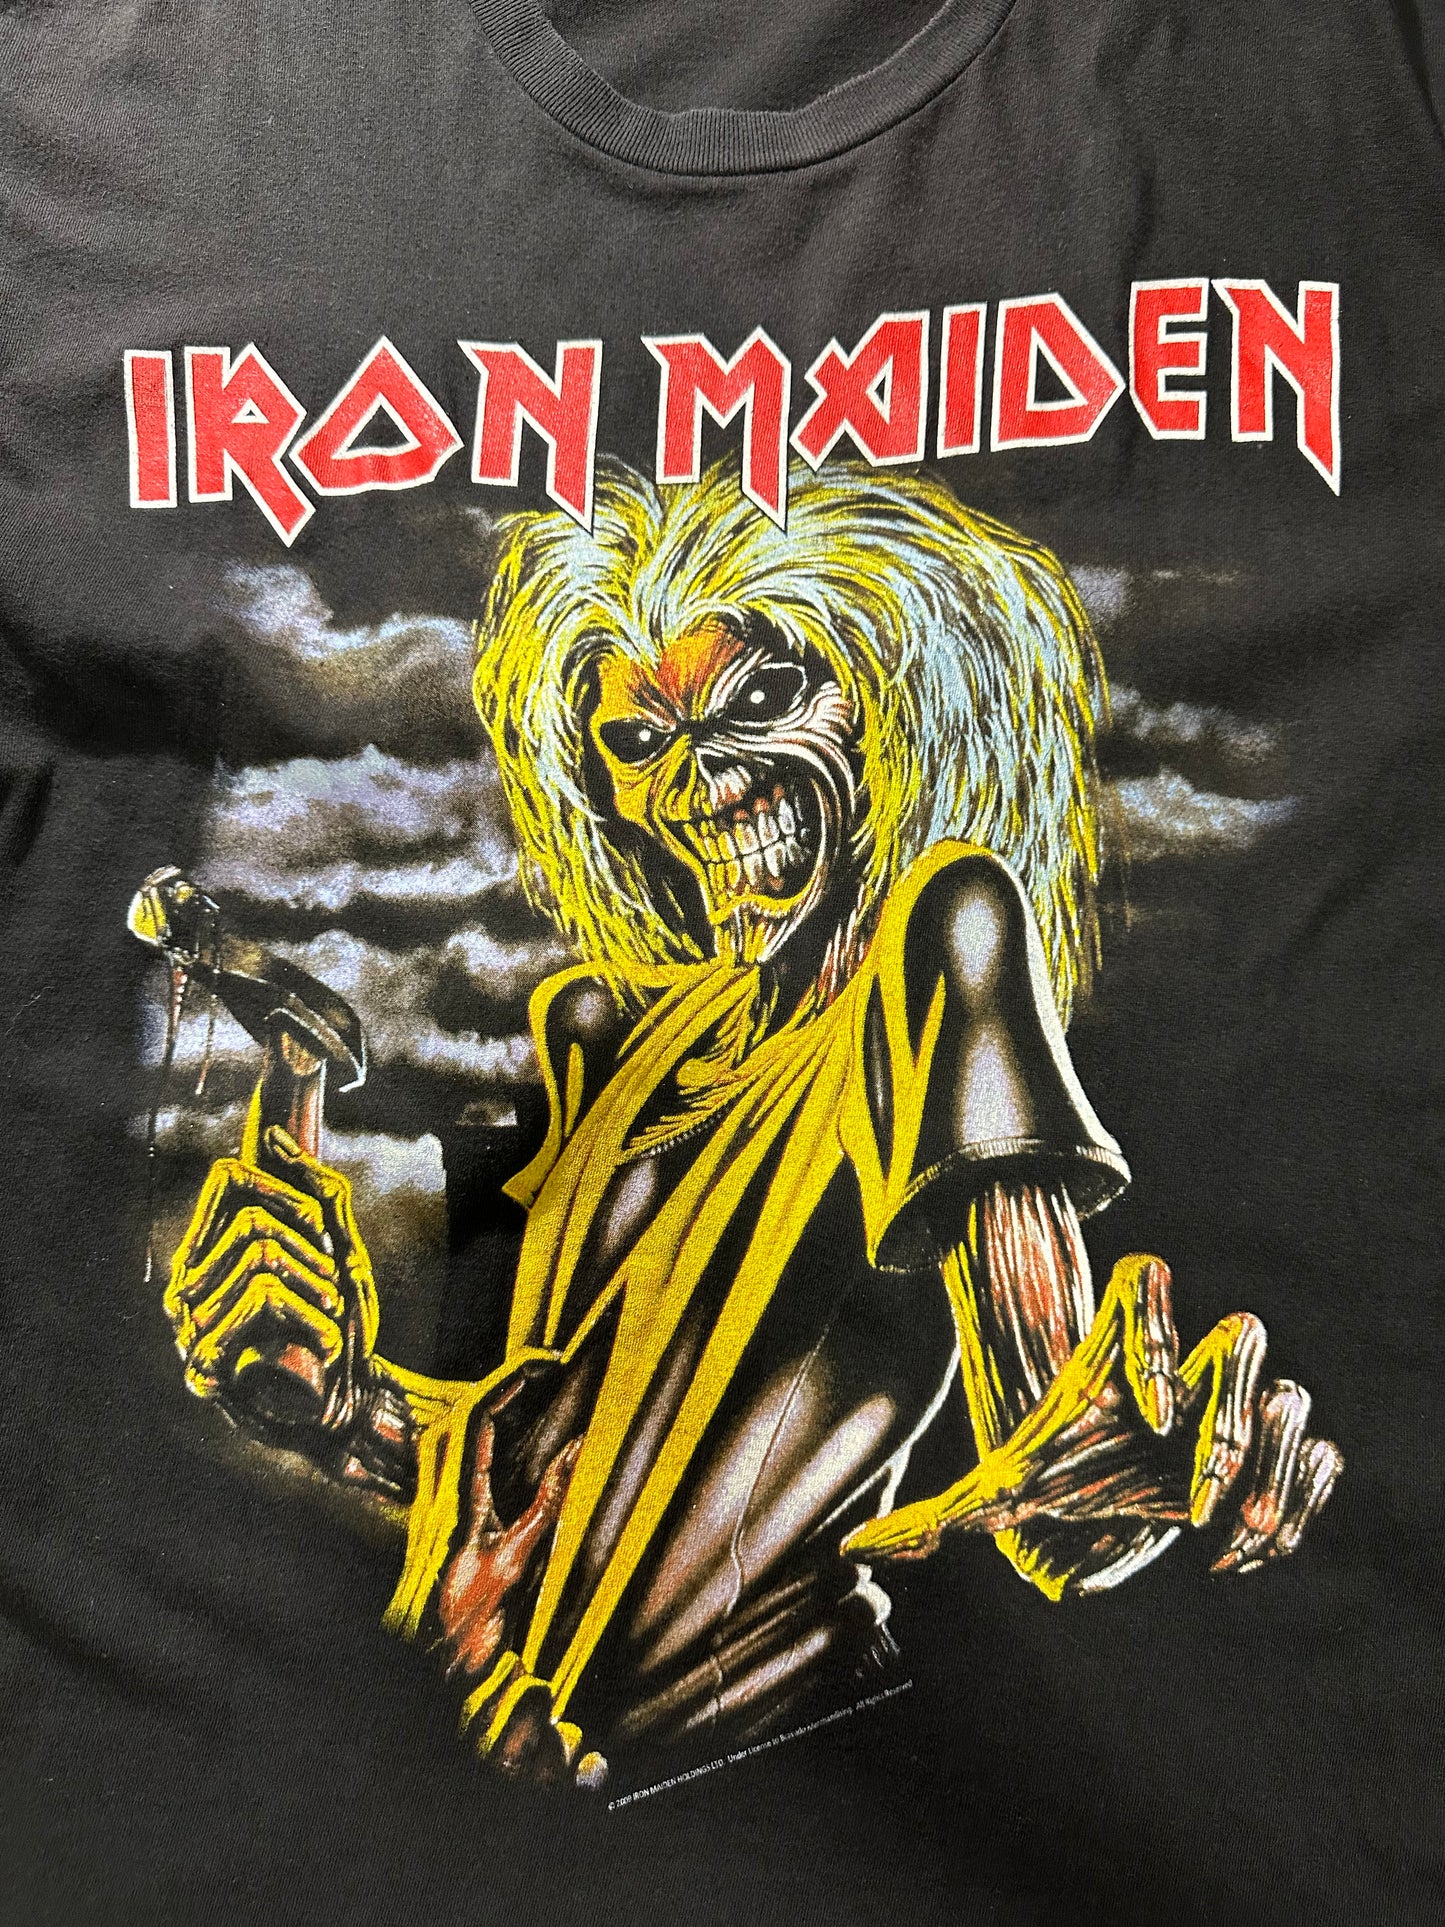 Iron maiden band t-shirt